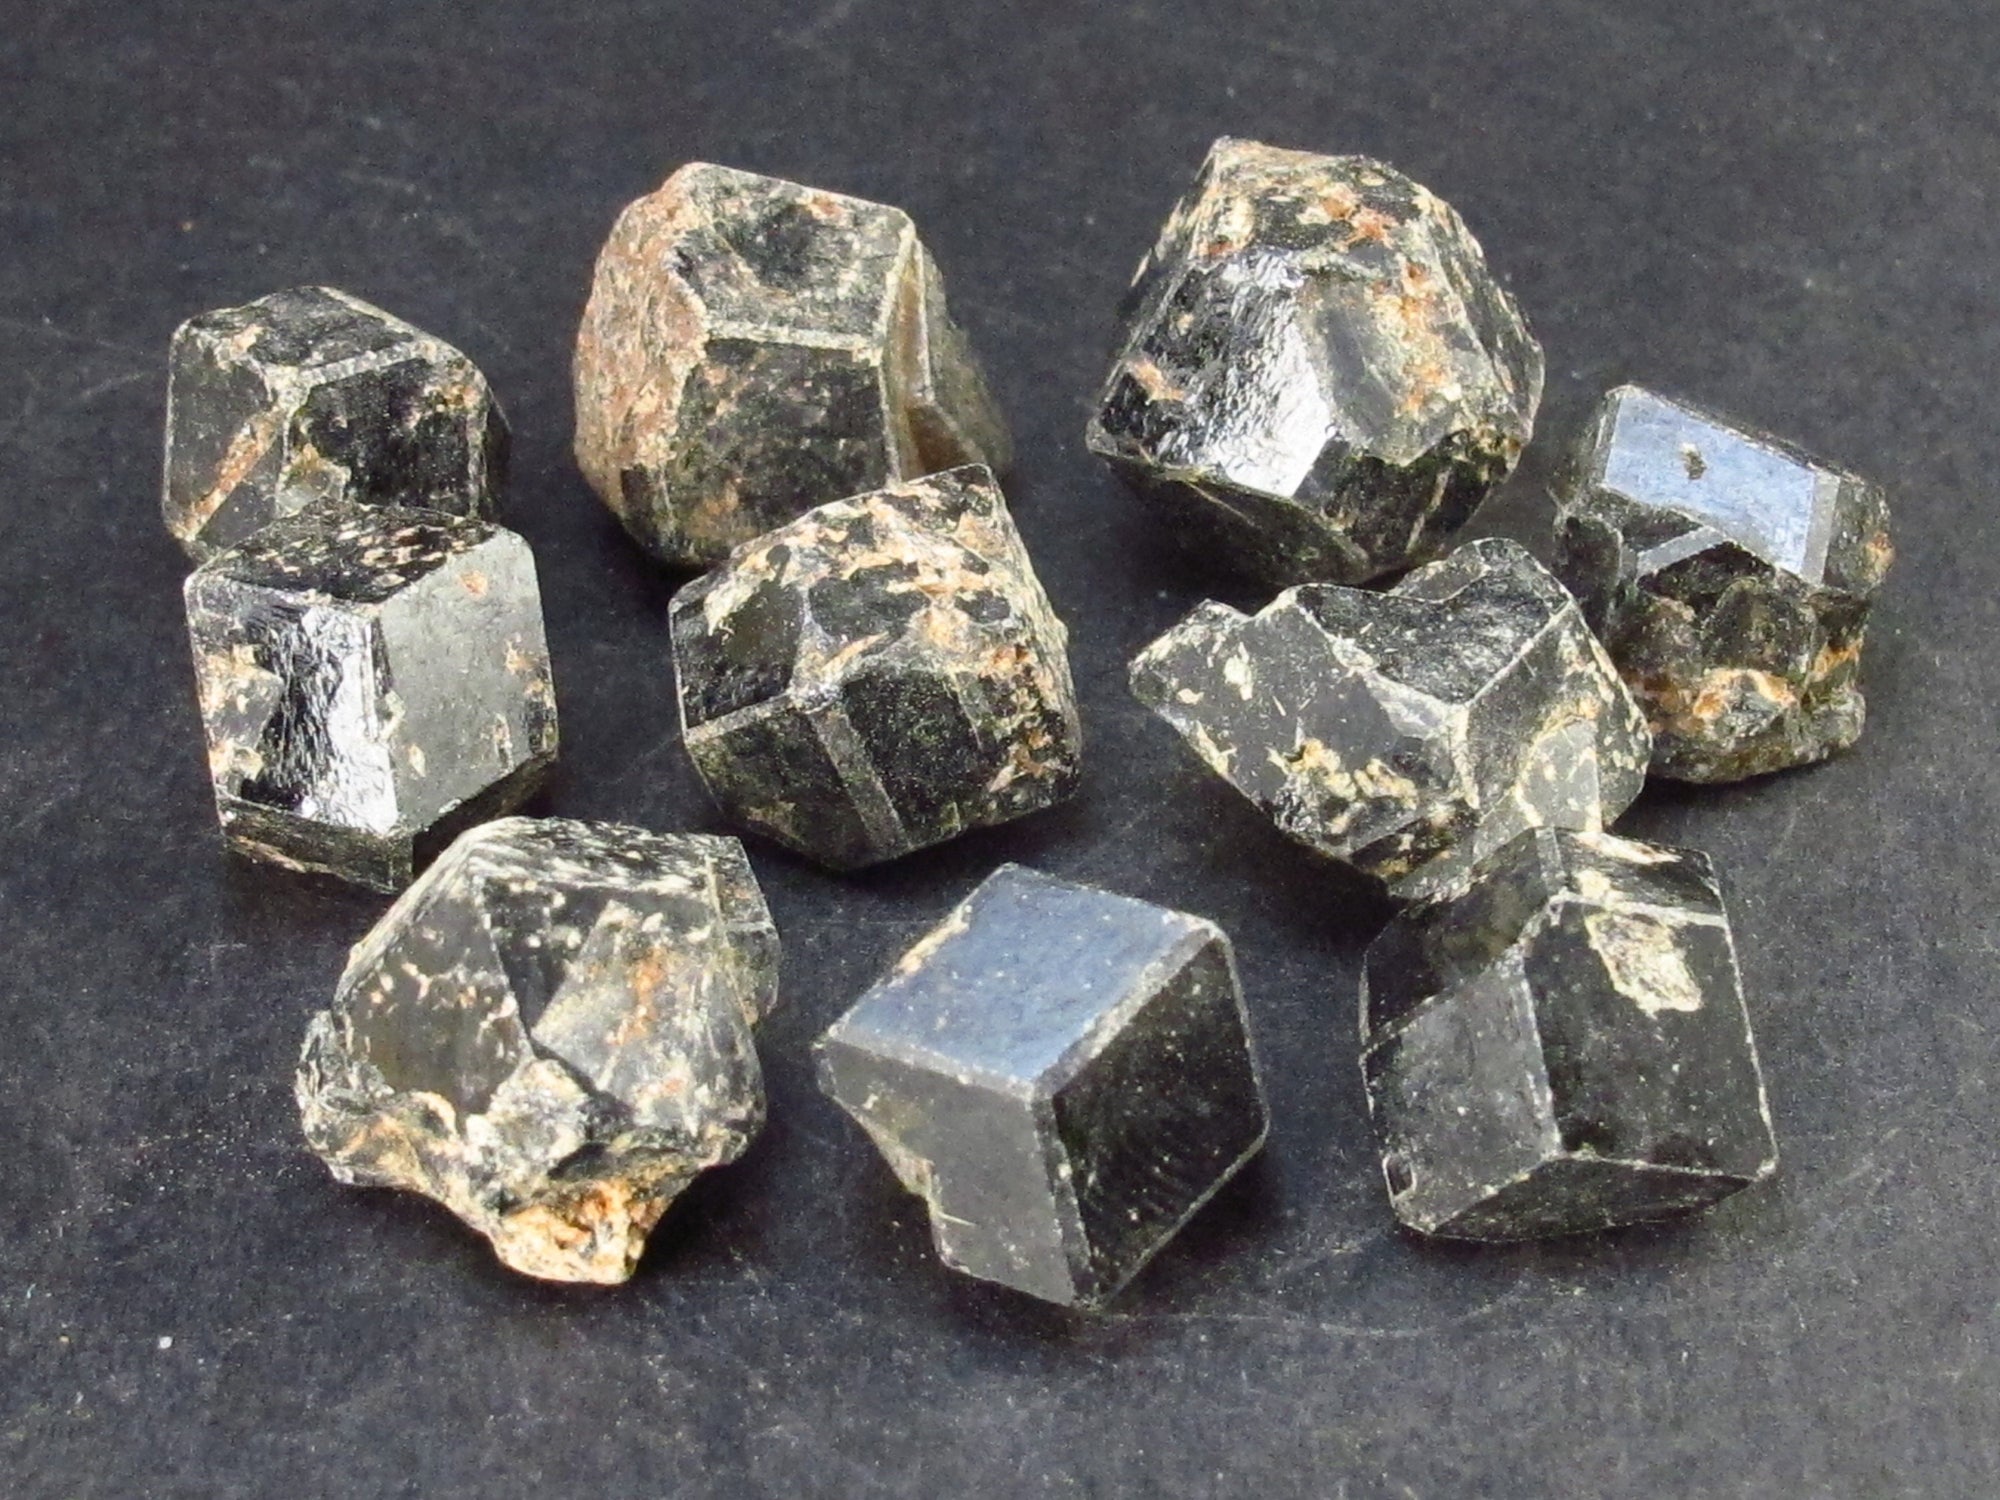 Lot of 10 Black Melanite Andradite Garnet Crystals From Tanzania